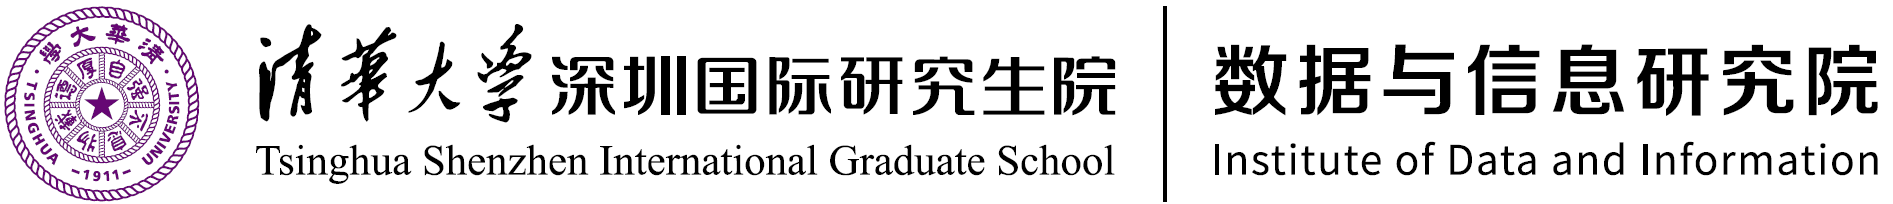 Institute of Data and Information (iDI), Tsinghua Shenzhen International Graduate School